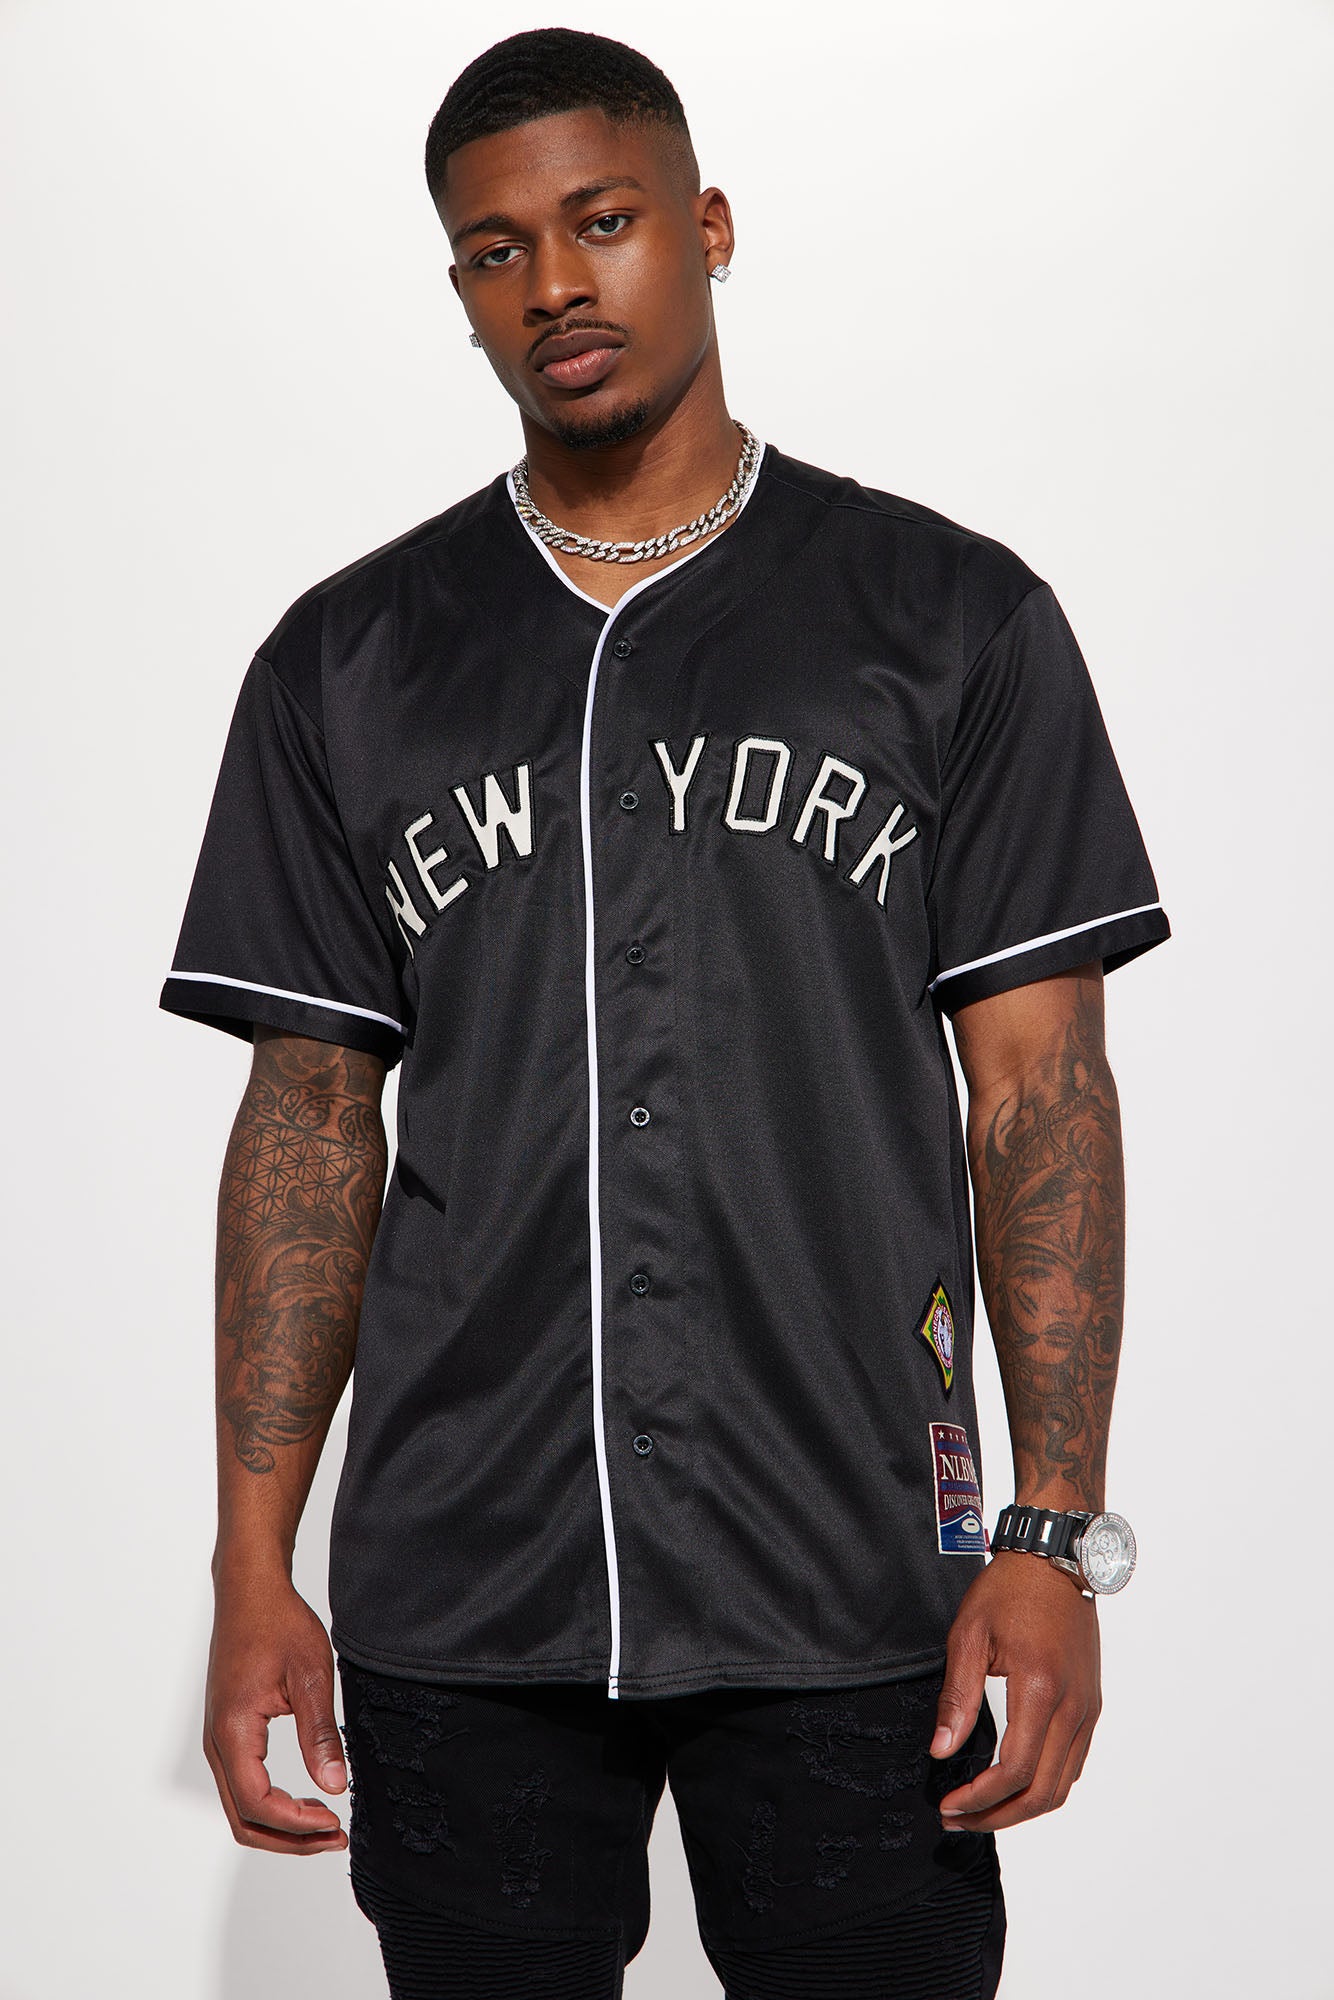 black baseball jersey outfit mens